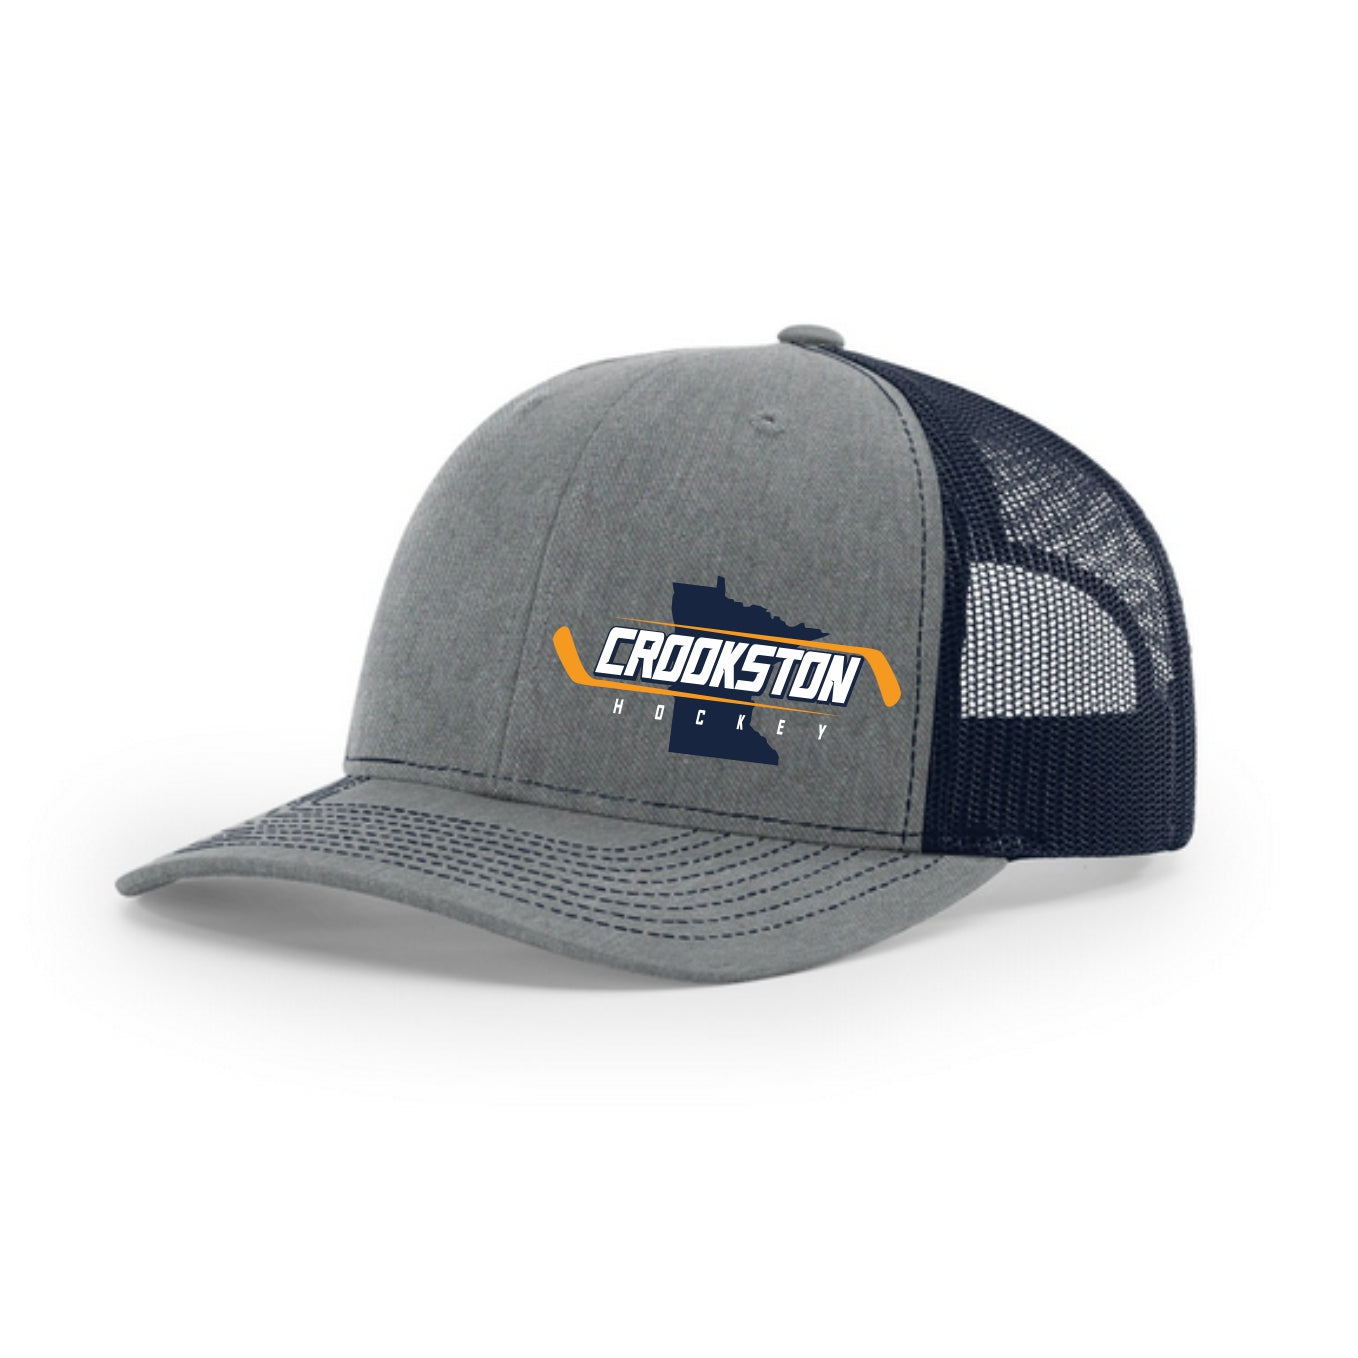 Crookston Youth Hockey - Richardson Trucker - Embroidery